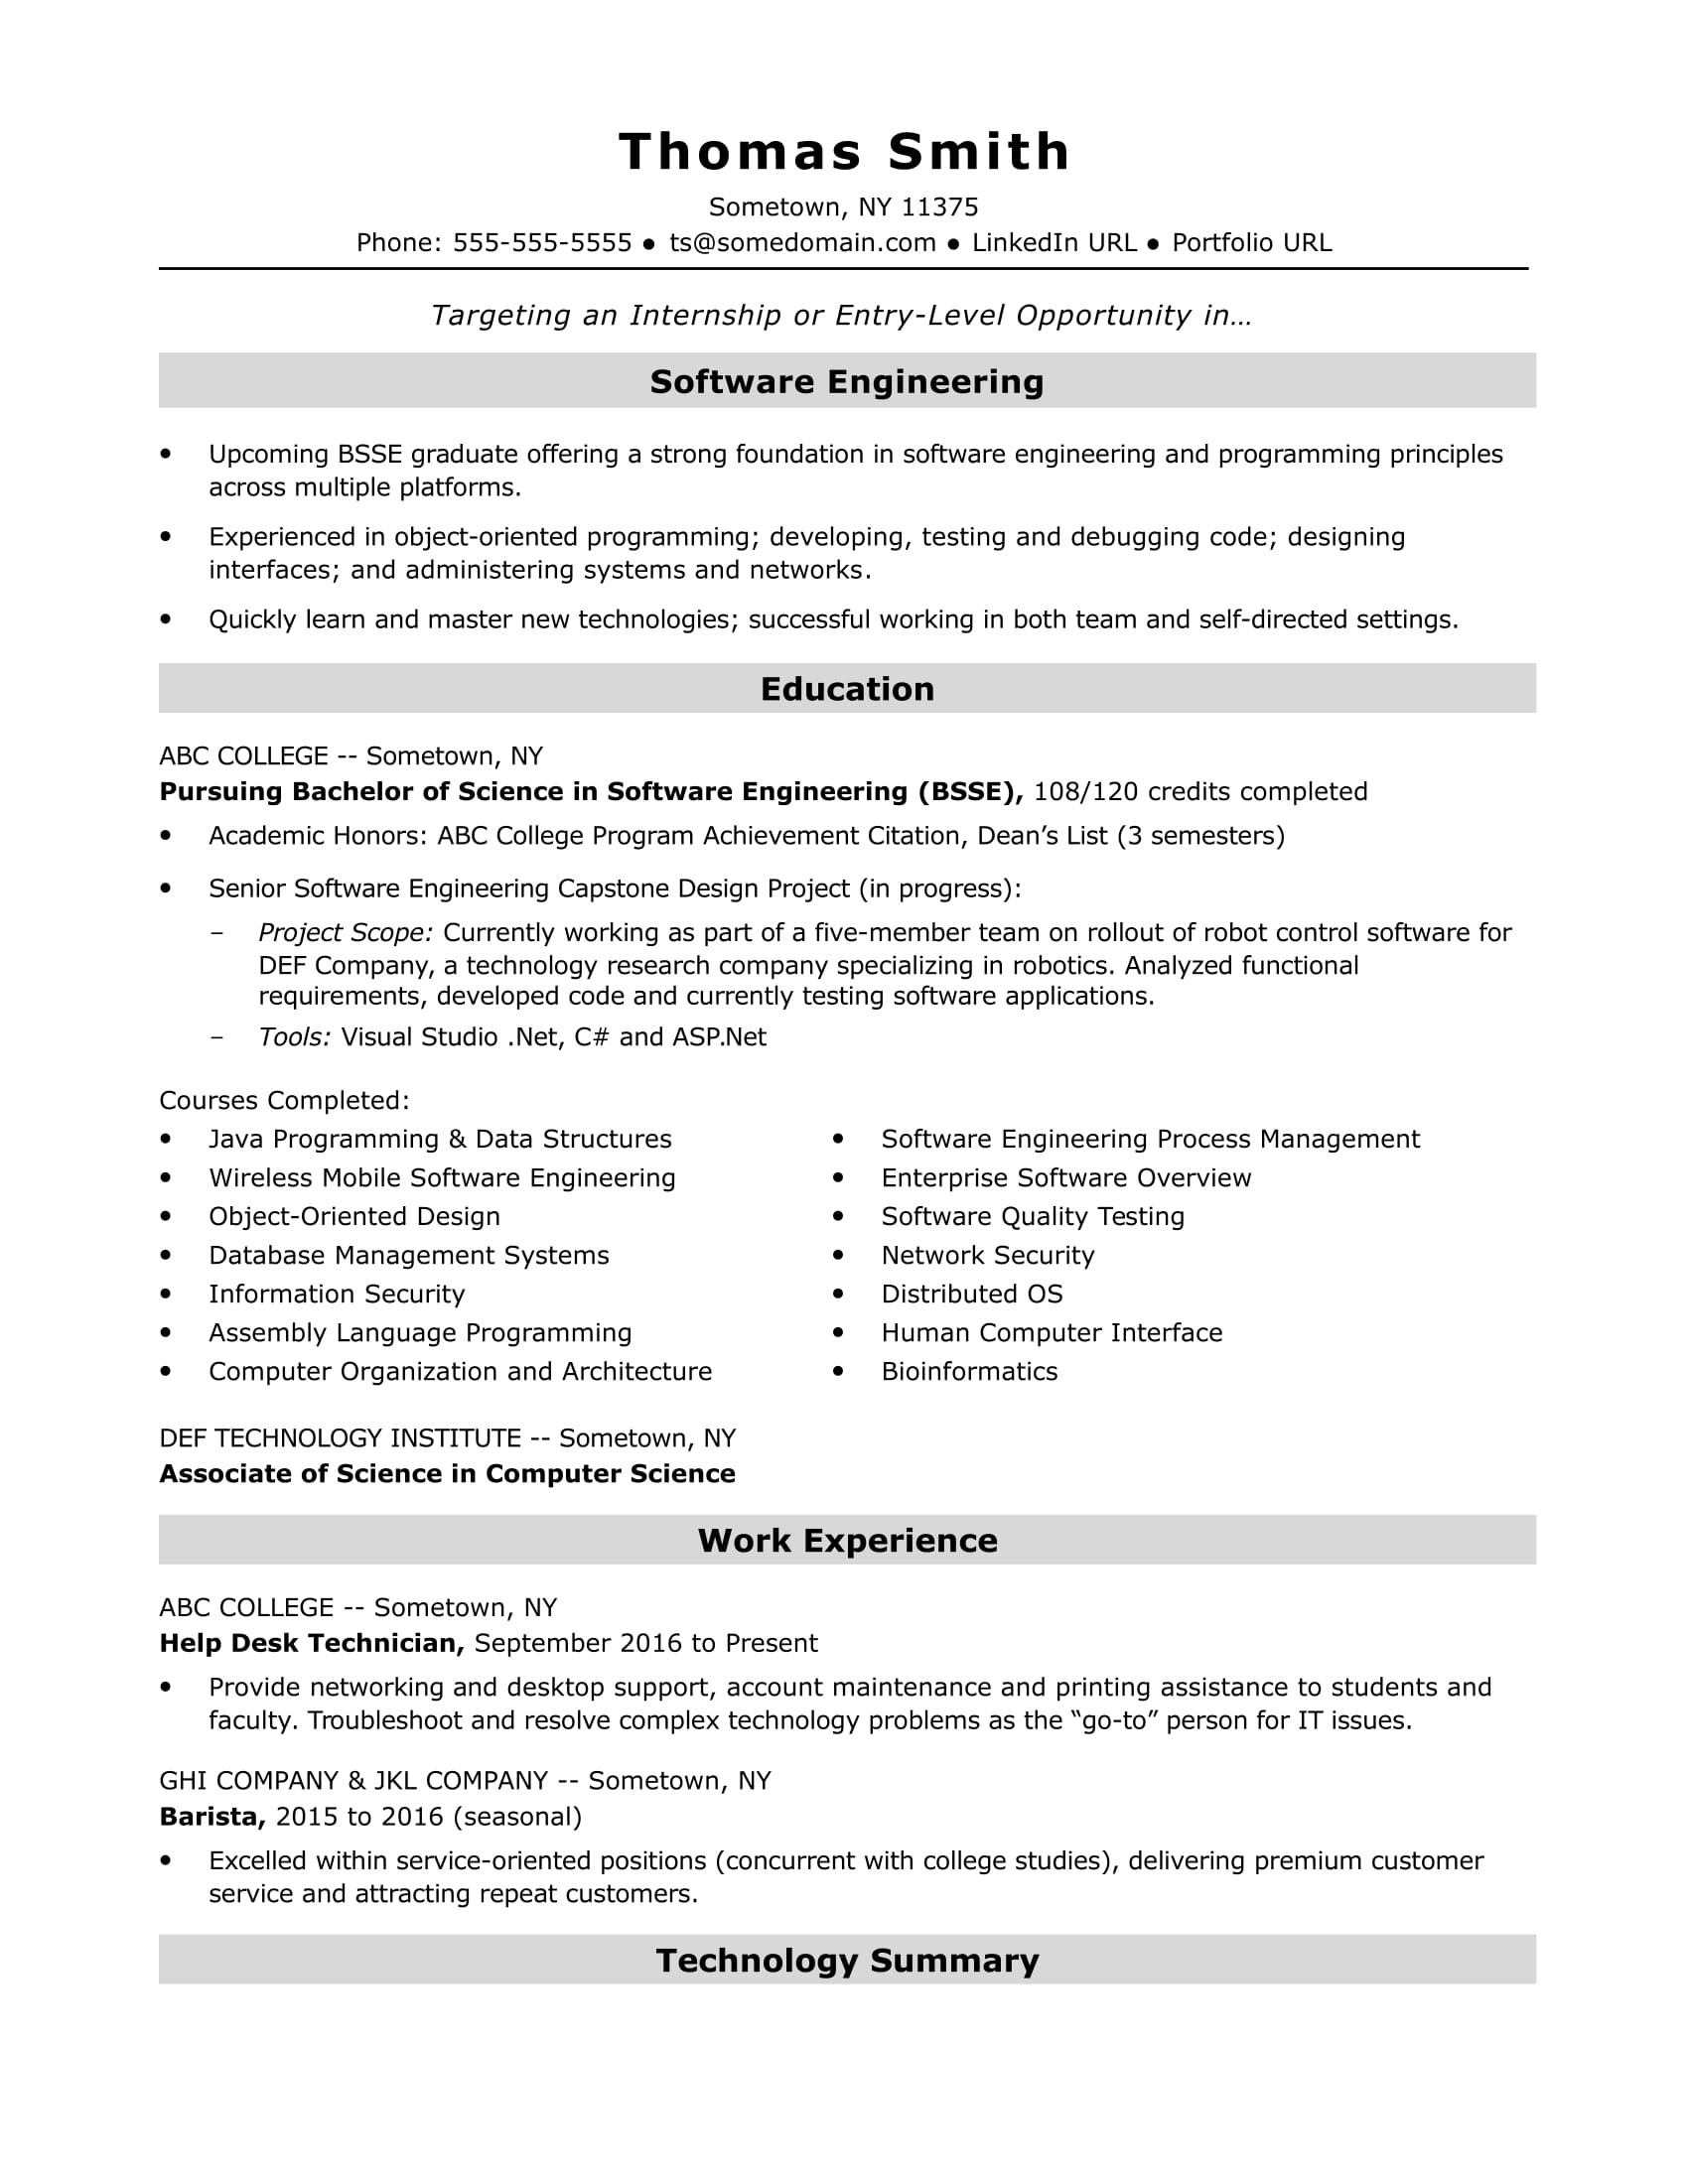 Sample Resume for Fresh Graduate Engineering Entry-level software Engineer Resume Sample Monster.com